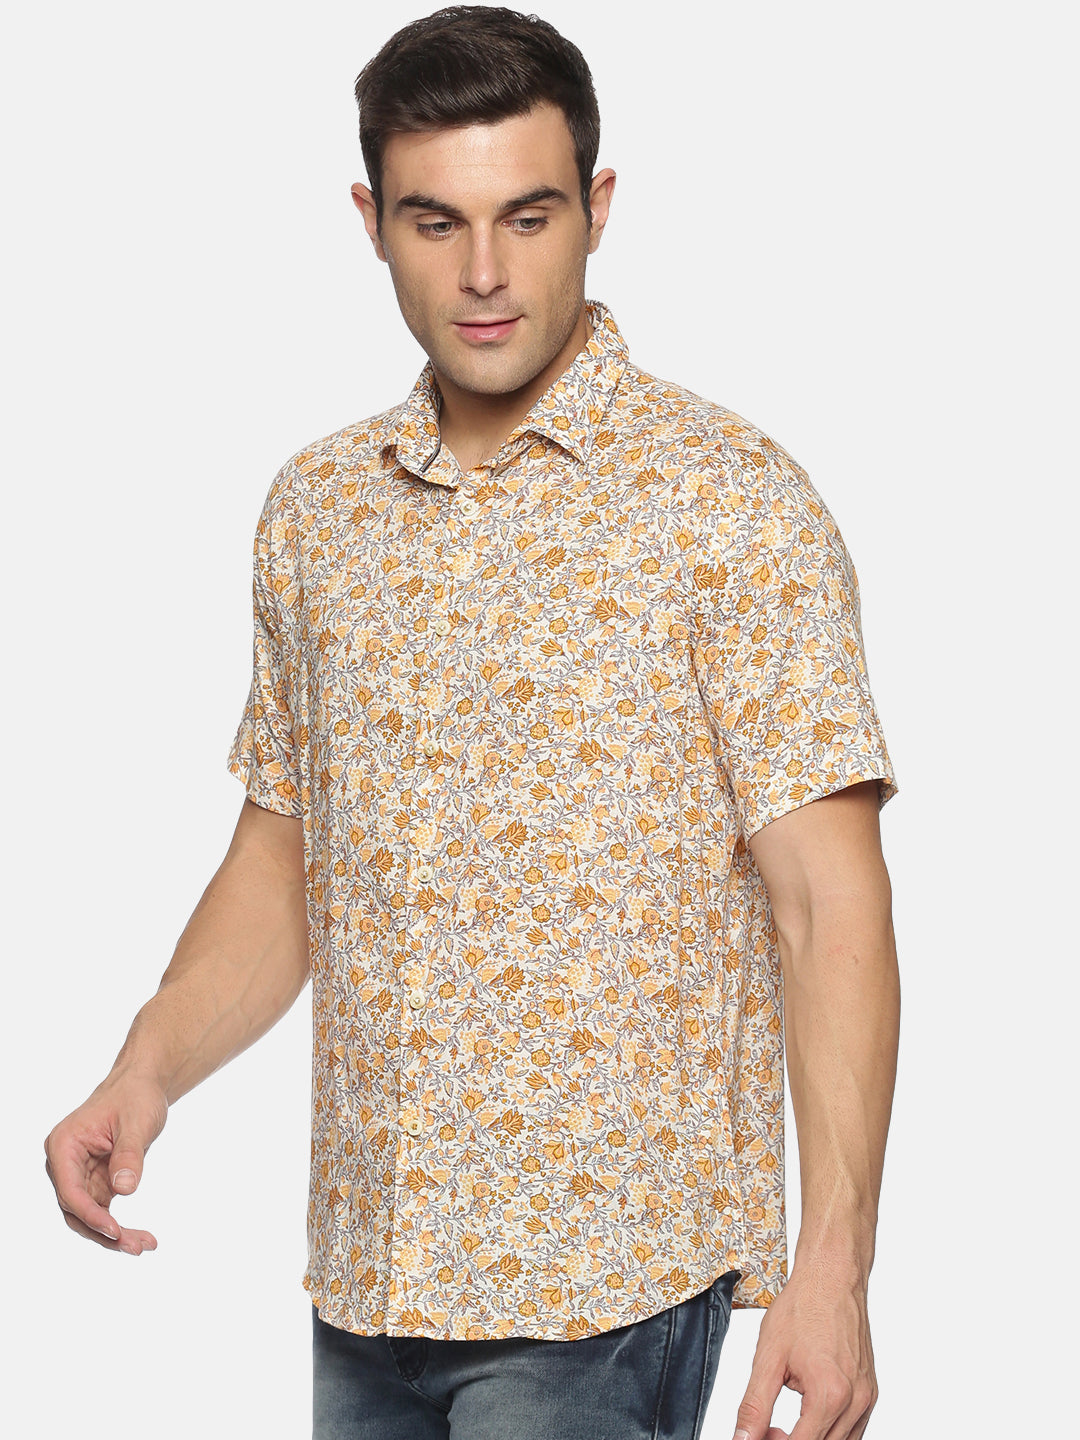 Don Vino Men's Multicolor Printed Half Sleeve Casual Shirt